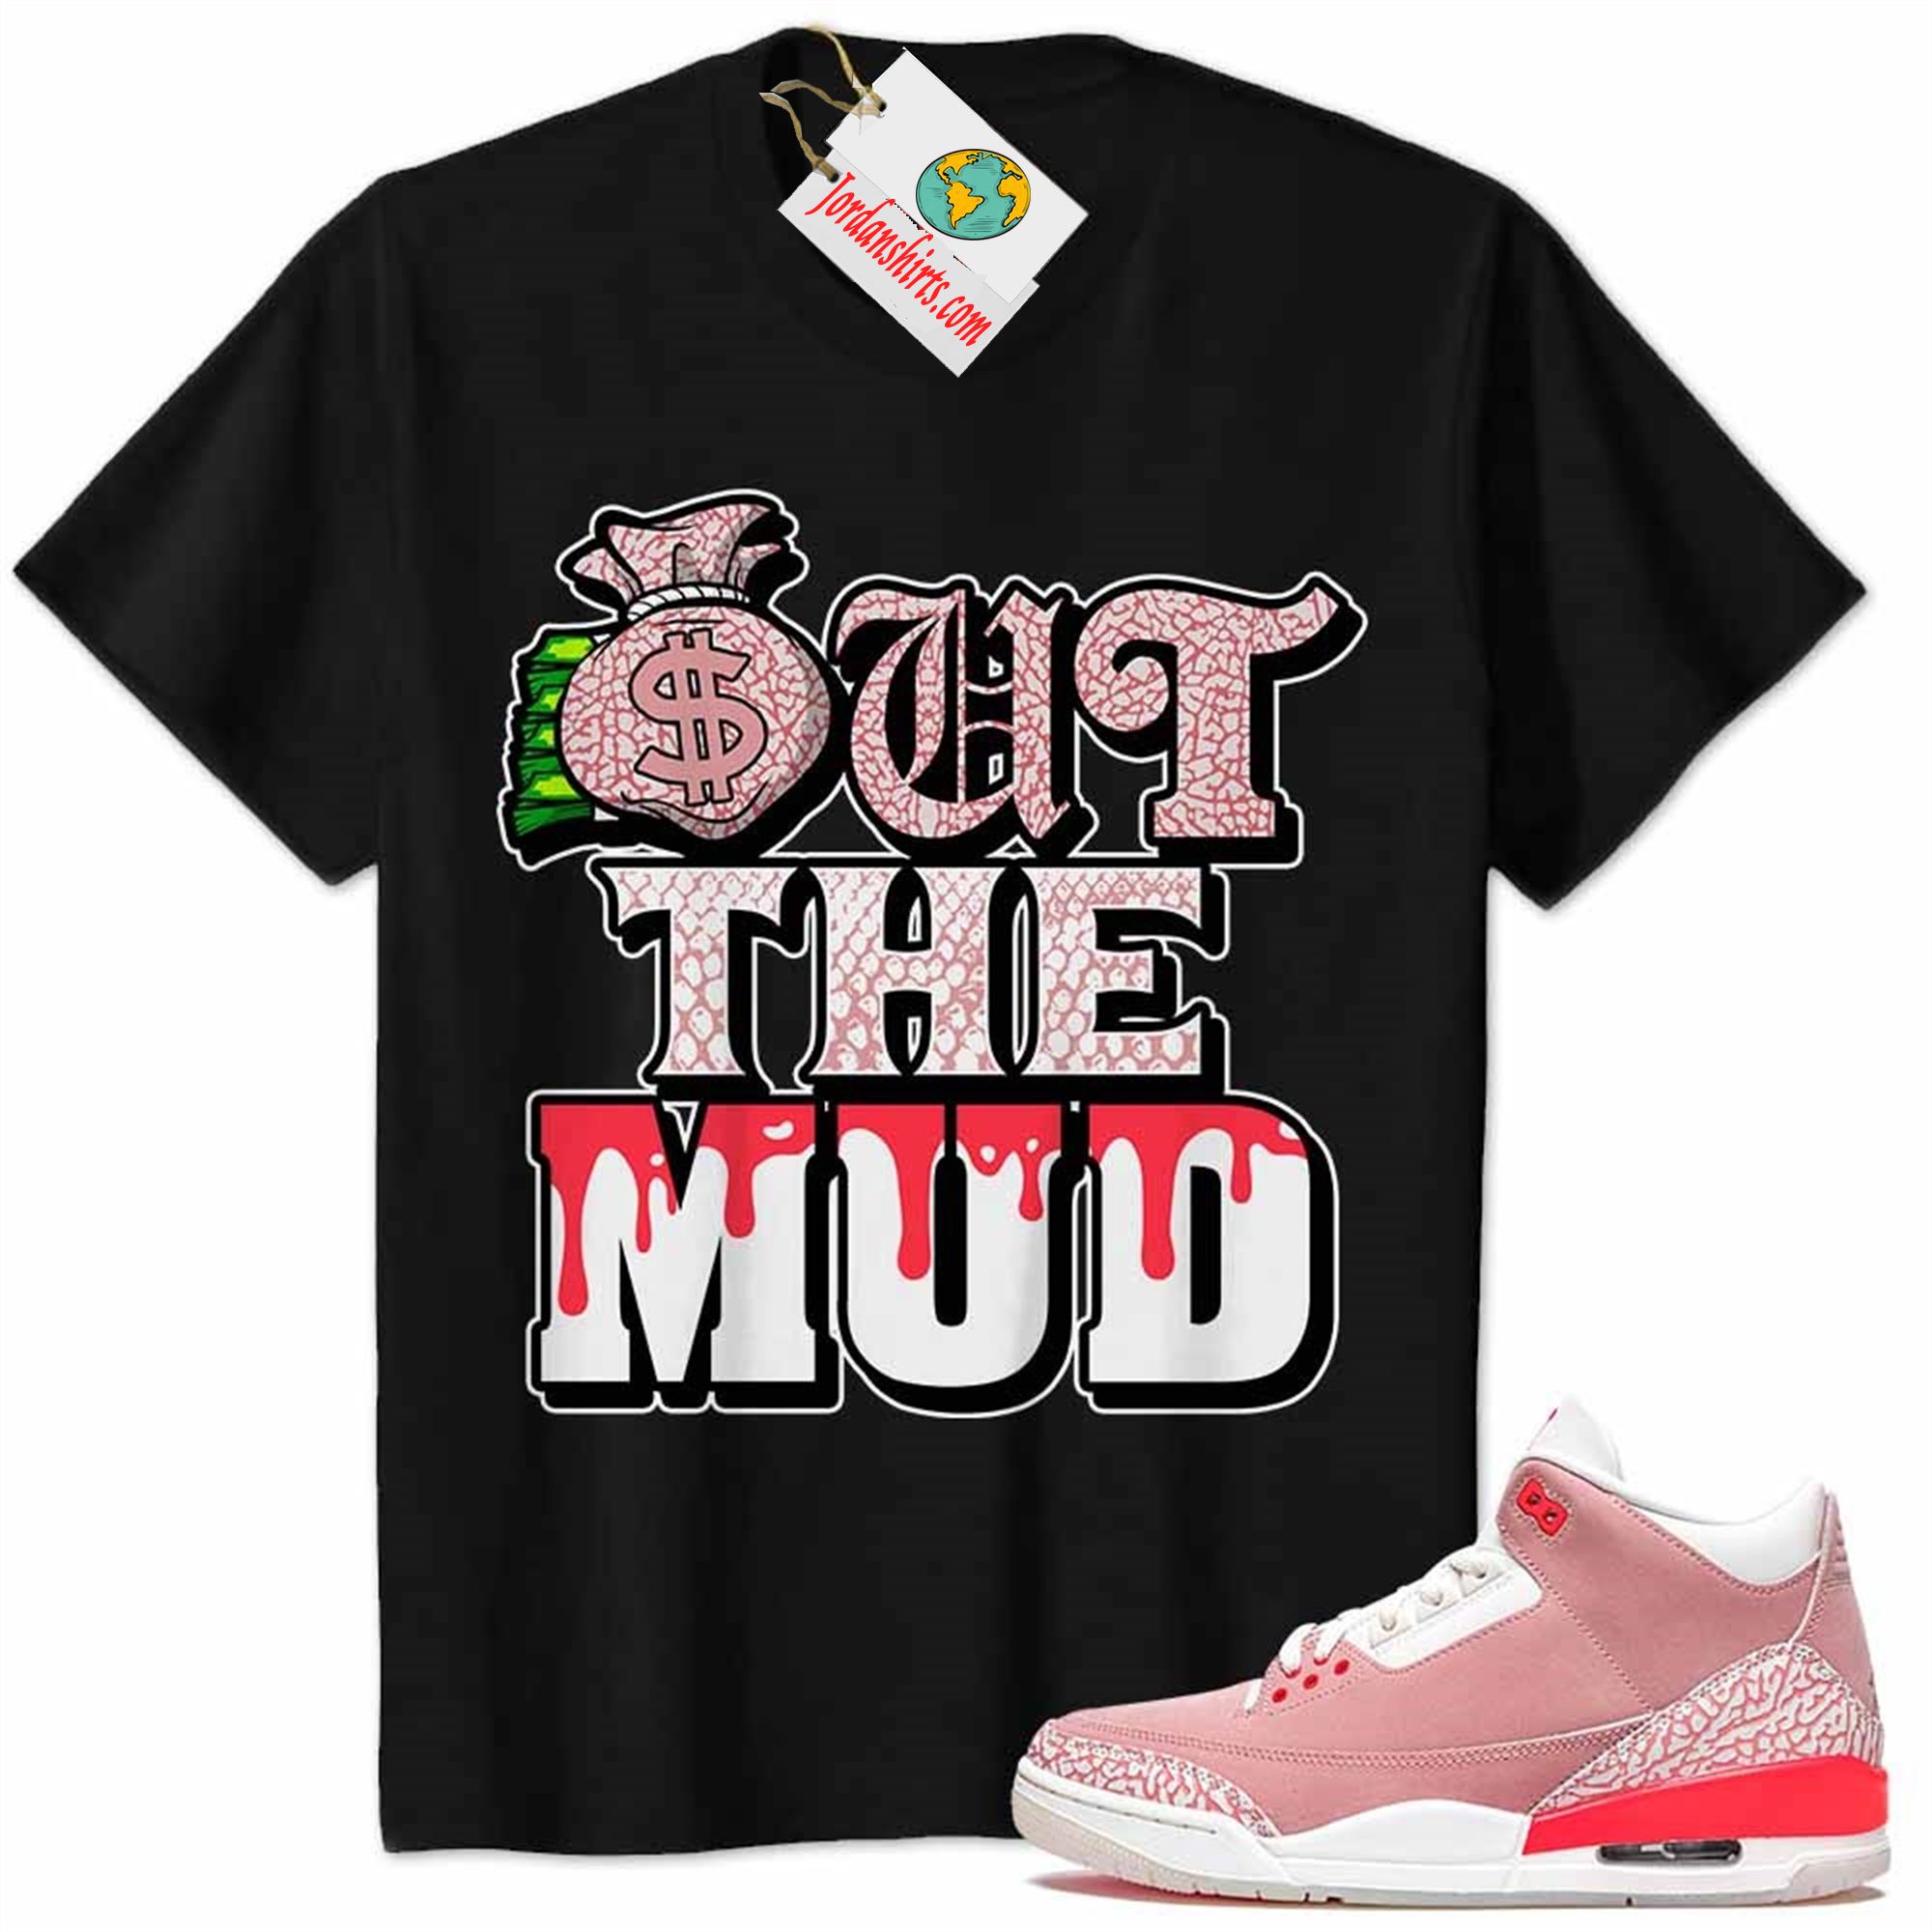 Jordan 3 Shirt, Jordan 3 Rust Pink Shirt Out The Mud Money Bag Black Full Size Up To 5xl